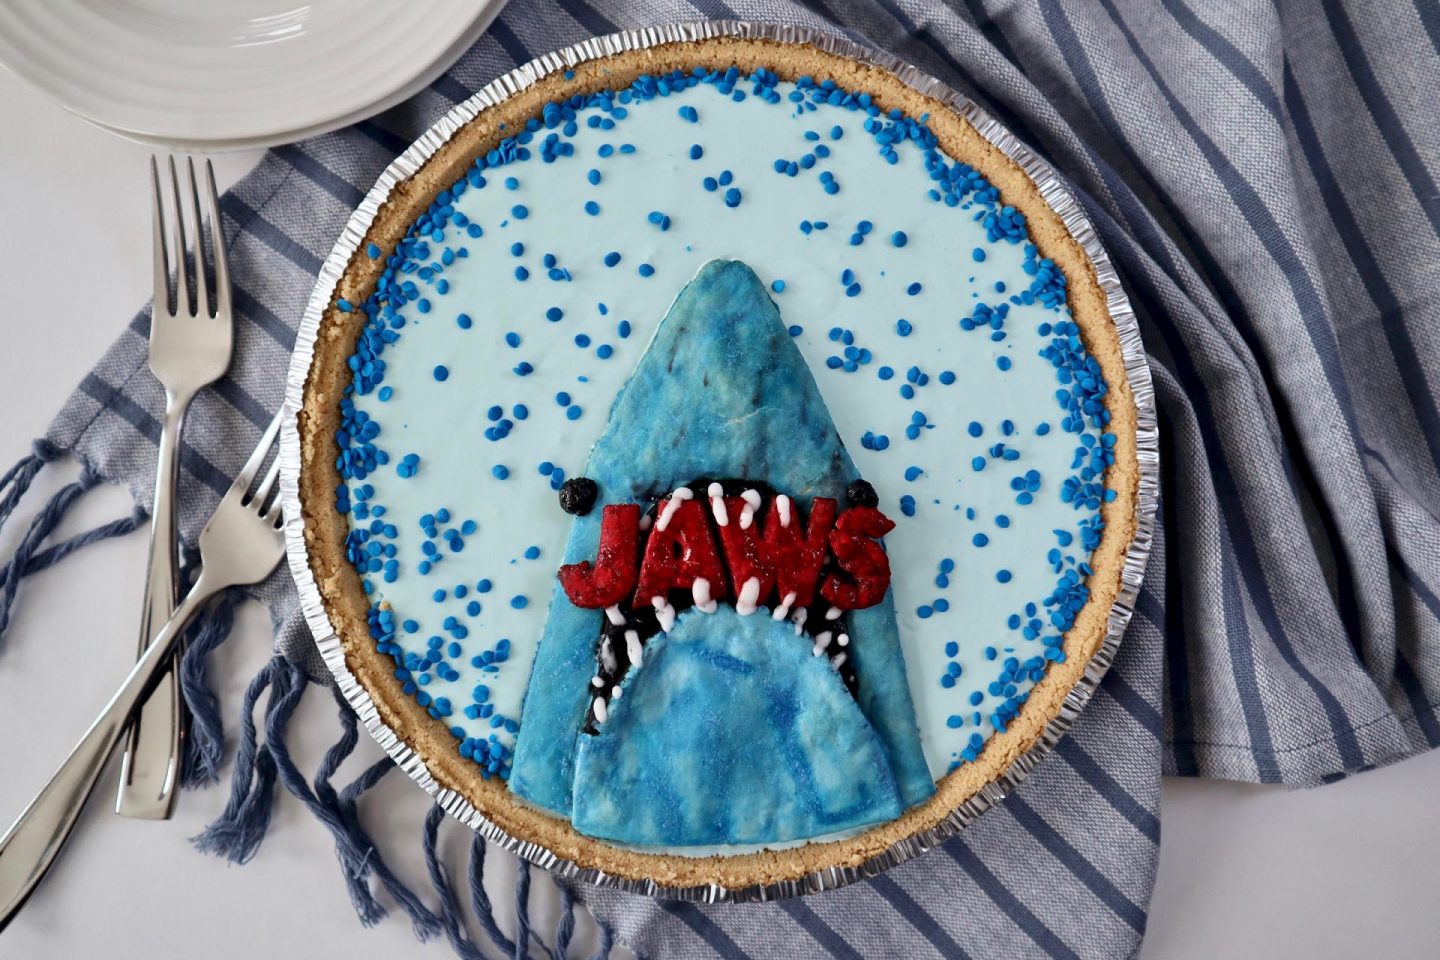 Jaws Pie by Popcorner Reviews